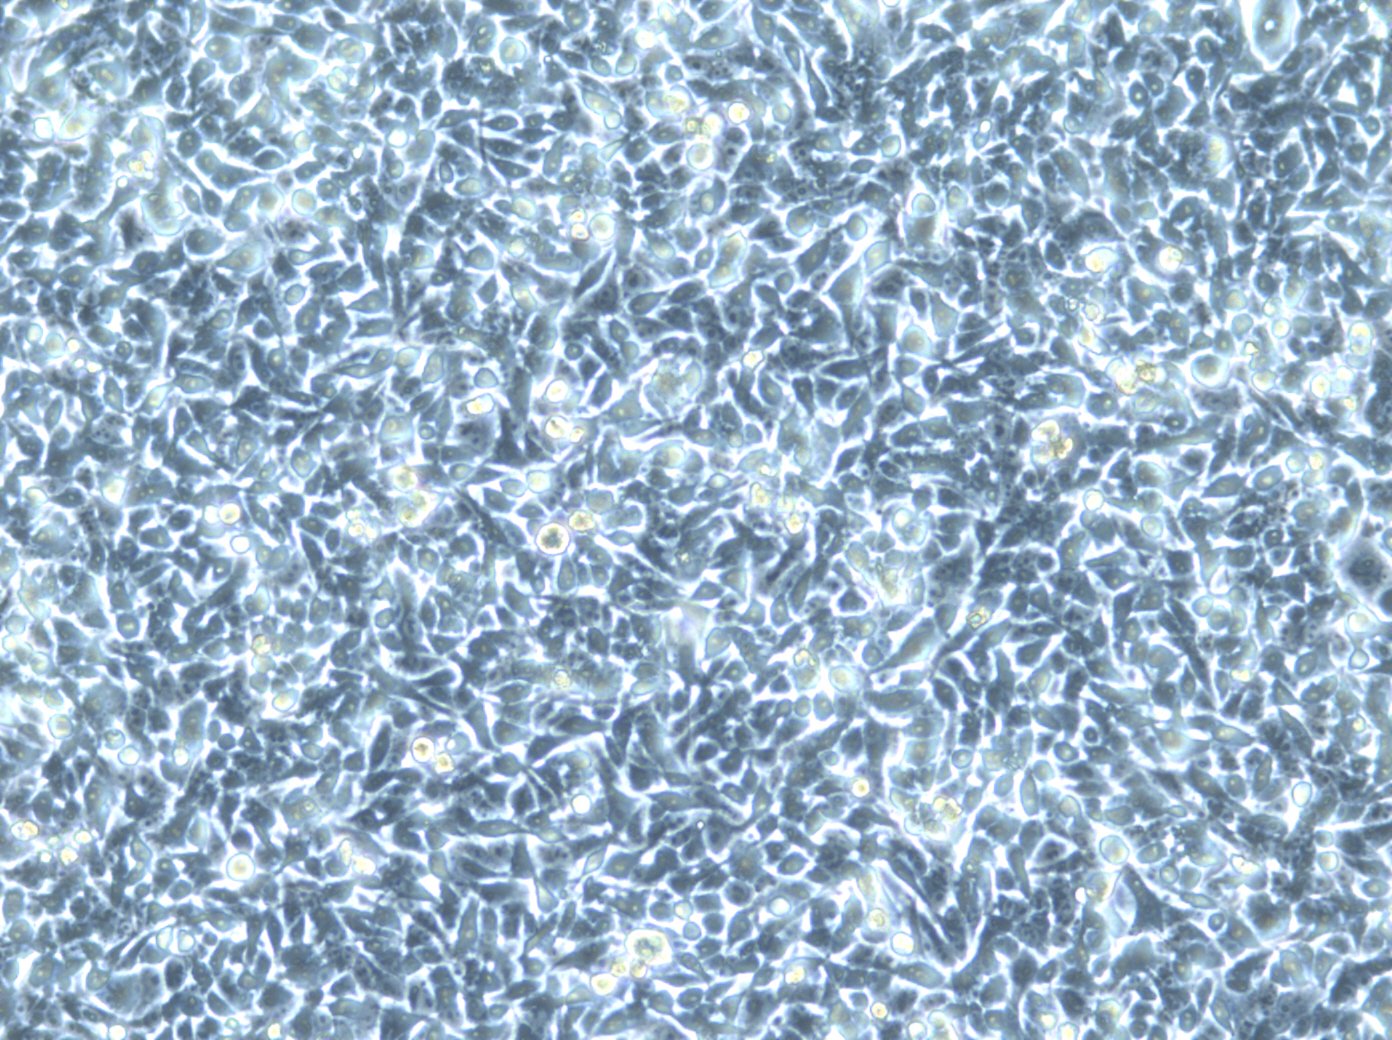 HK EGFP-LaminA/H2B-mCherry-Zellen